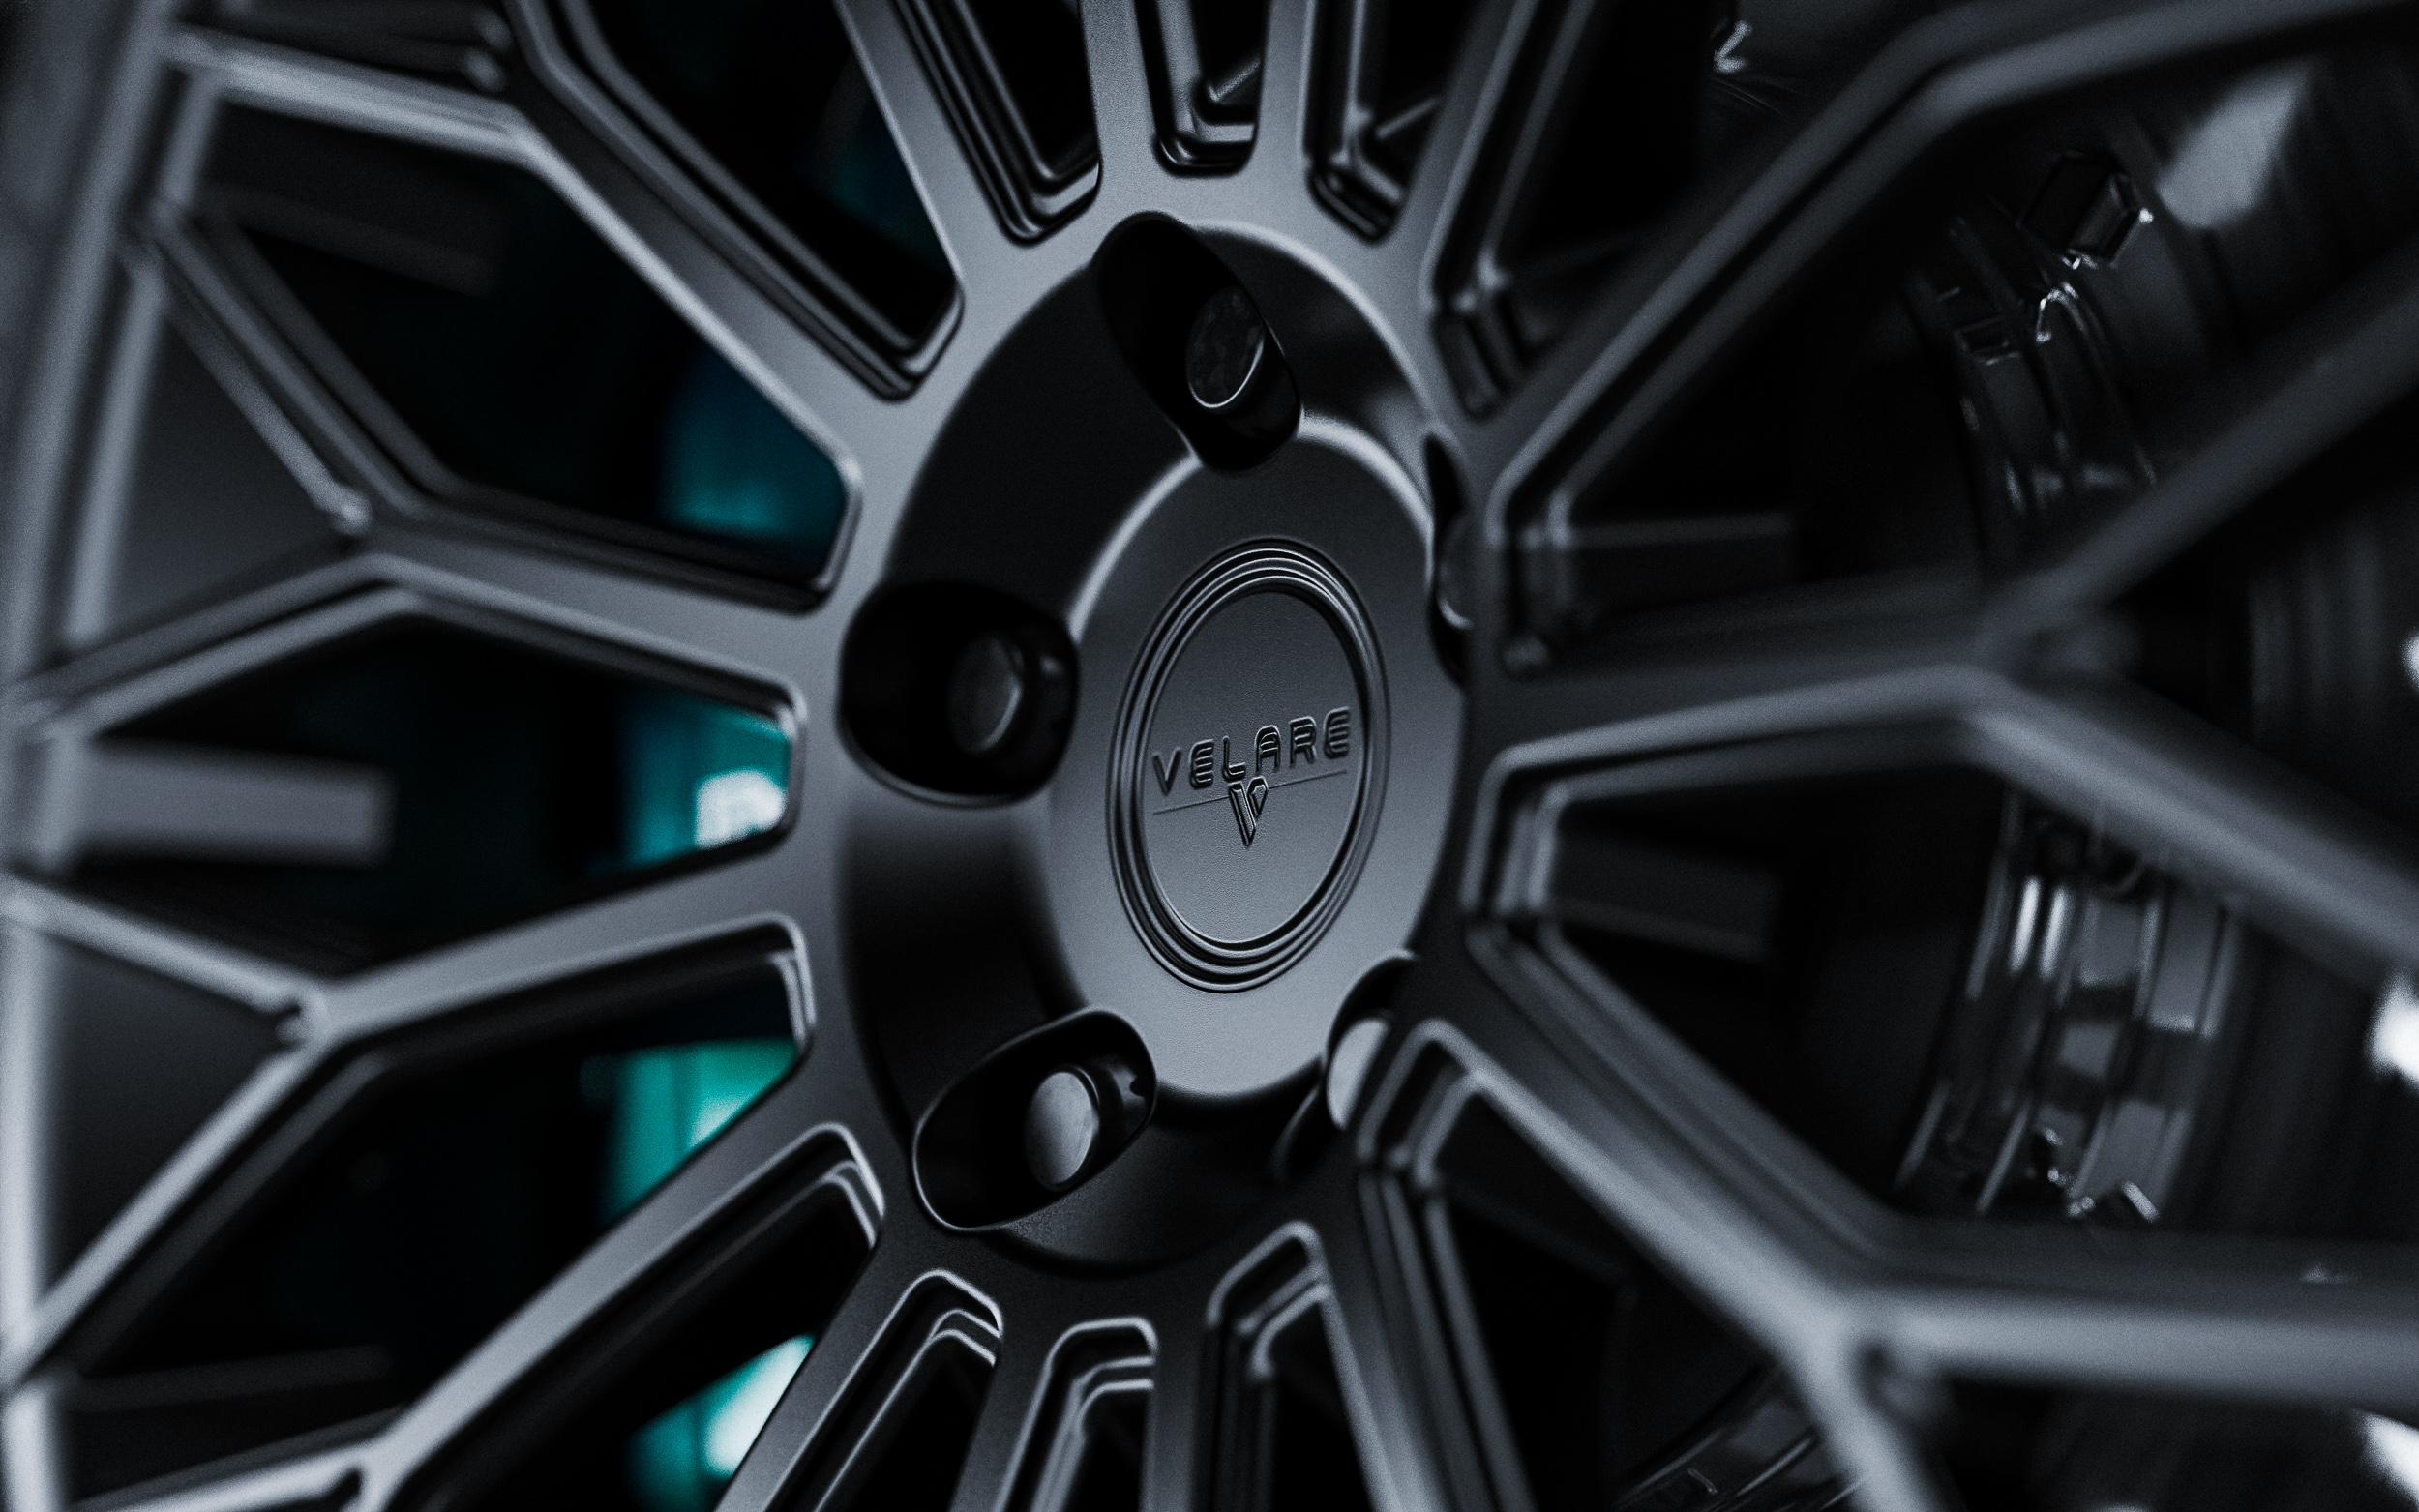 Rolls Royce Wrait Velare VLR10 Onyx Black Wipdesigns CGI Visuals (4 of 20)